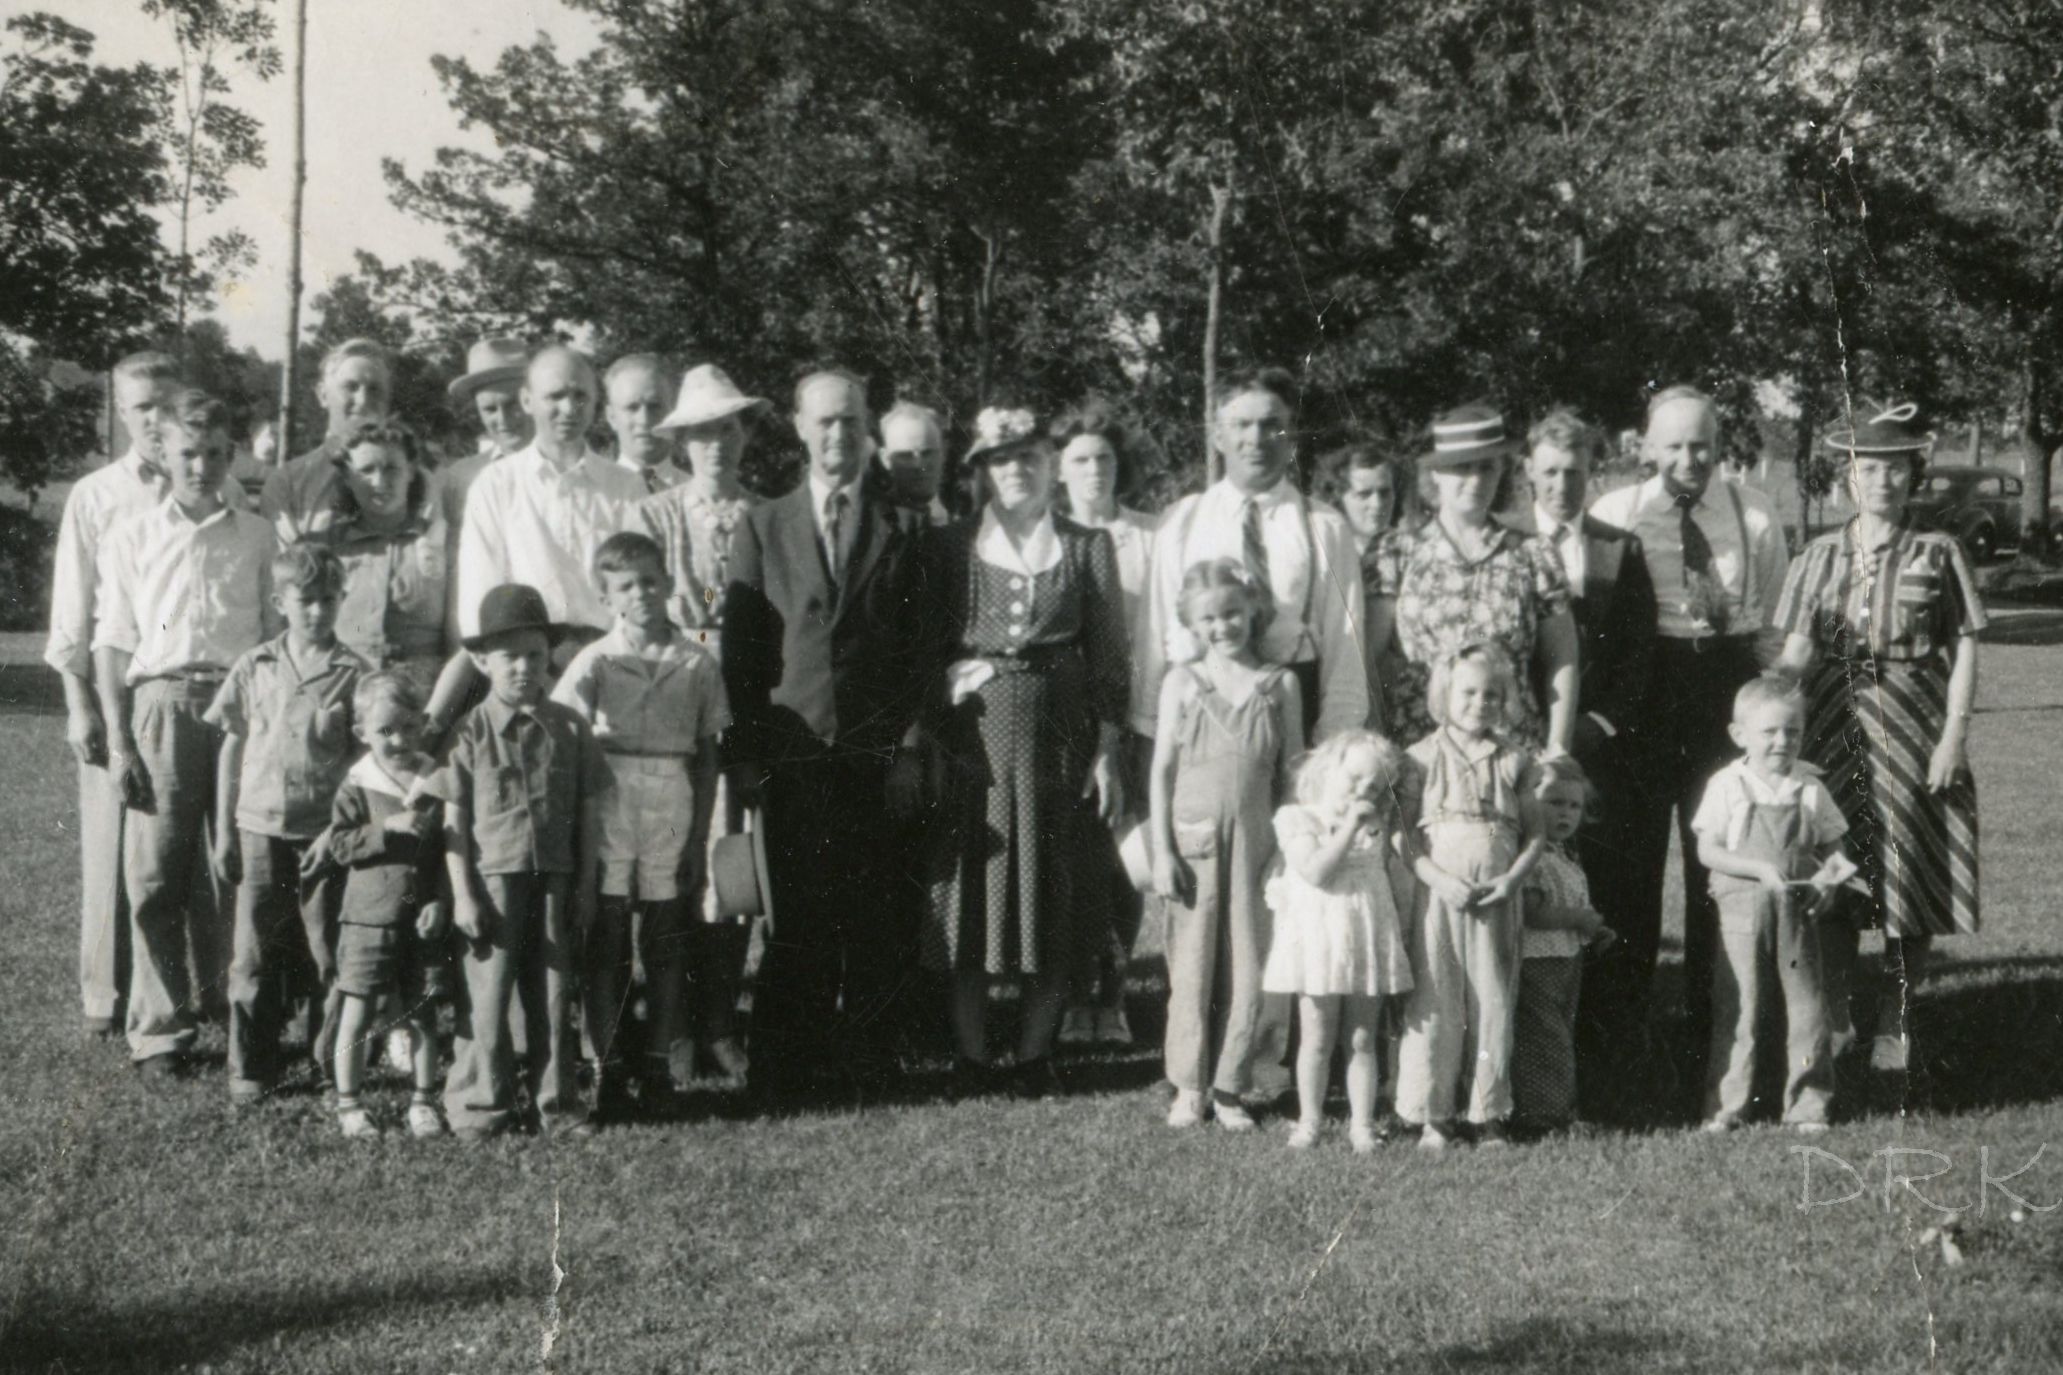 Christianson Family Reunion circa 1940